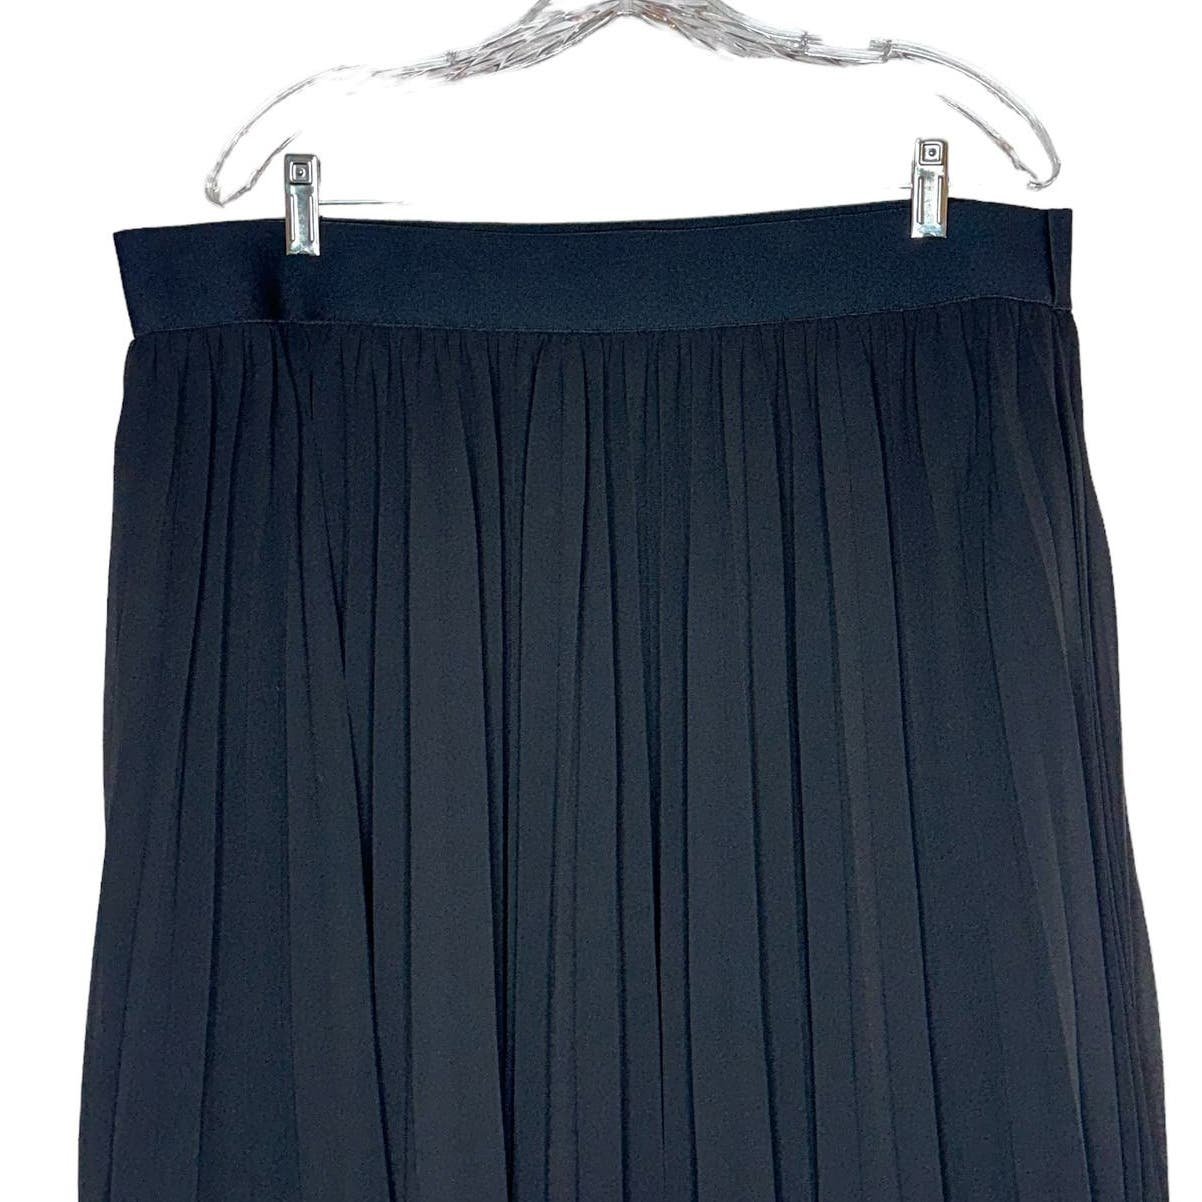 Wholesale price Torrid Chiffon Black Pleated Elastic Waist Mini Skirt Size 2XL 18/20 JaVdfBTRJ Buying Cheap